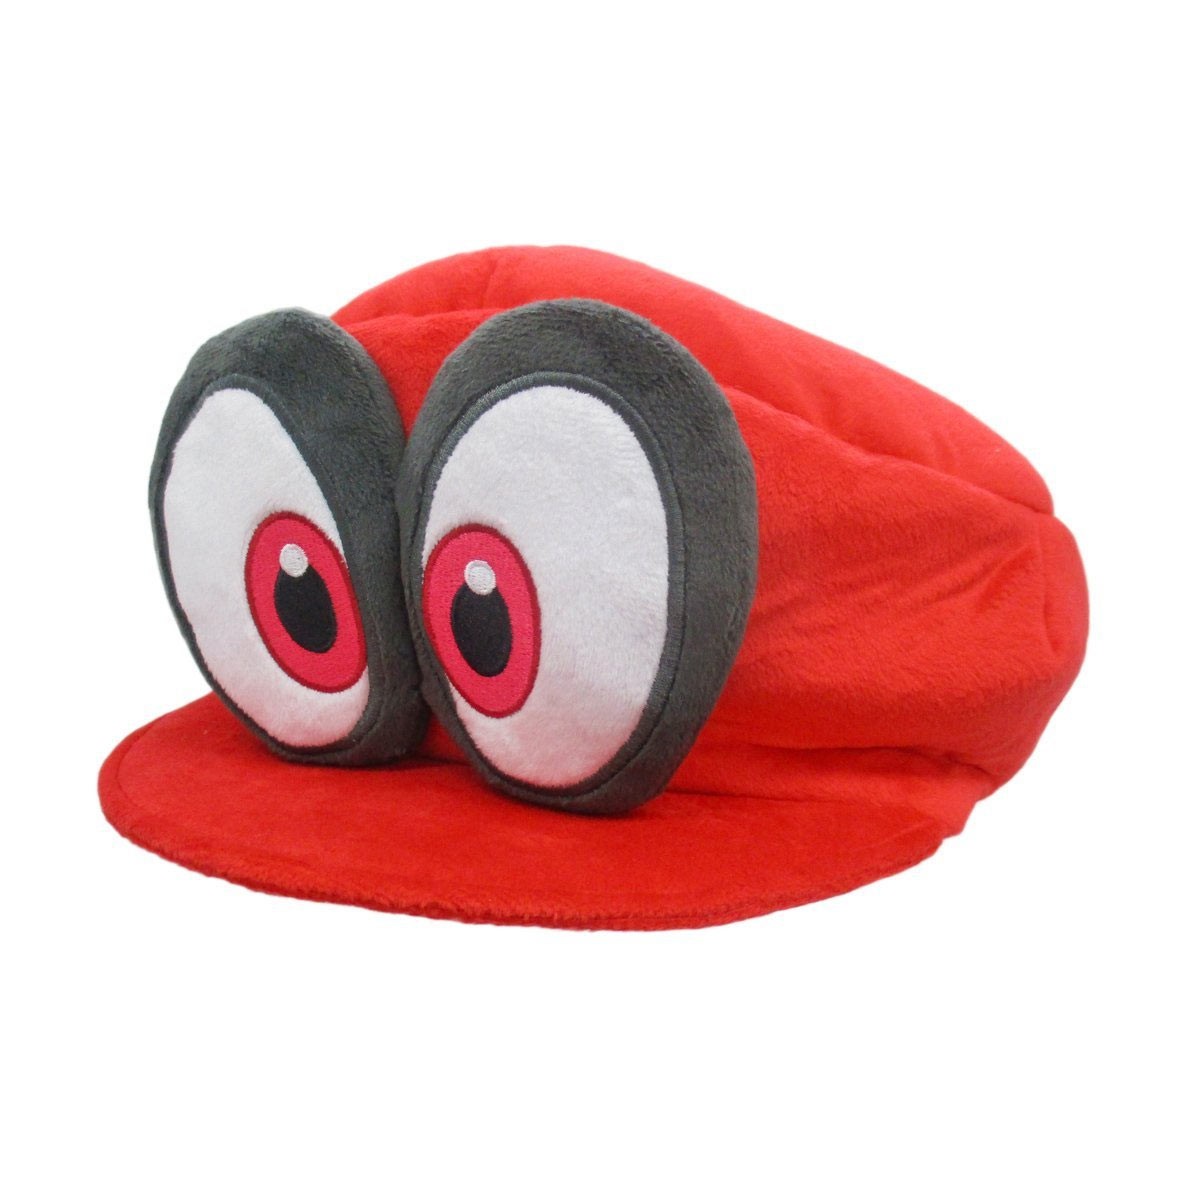 Super Mario Bros. Odyssey Red Cappy Plush